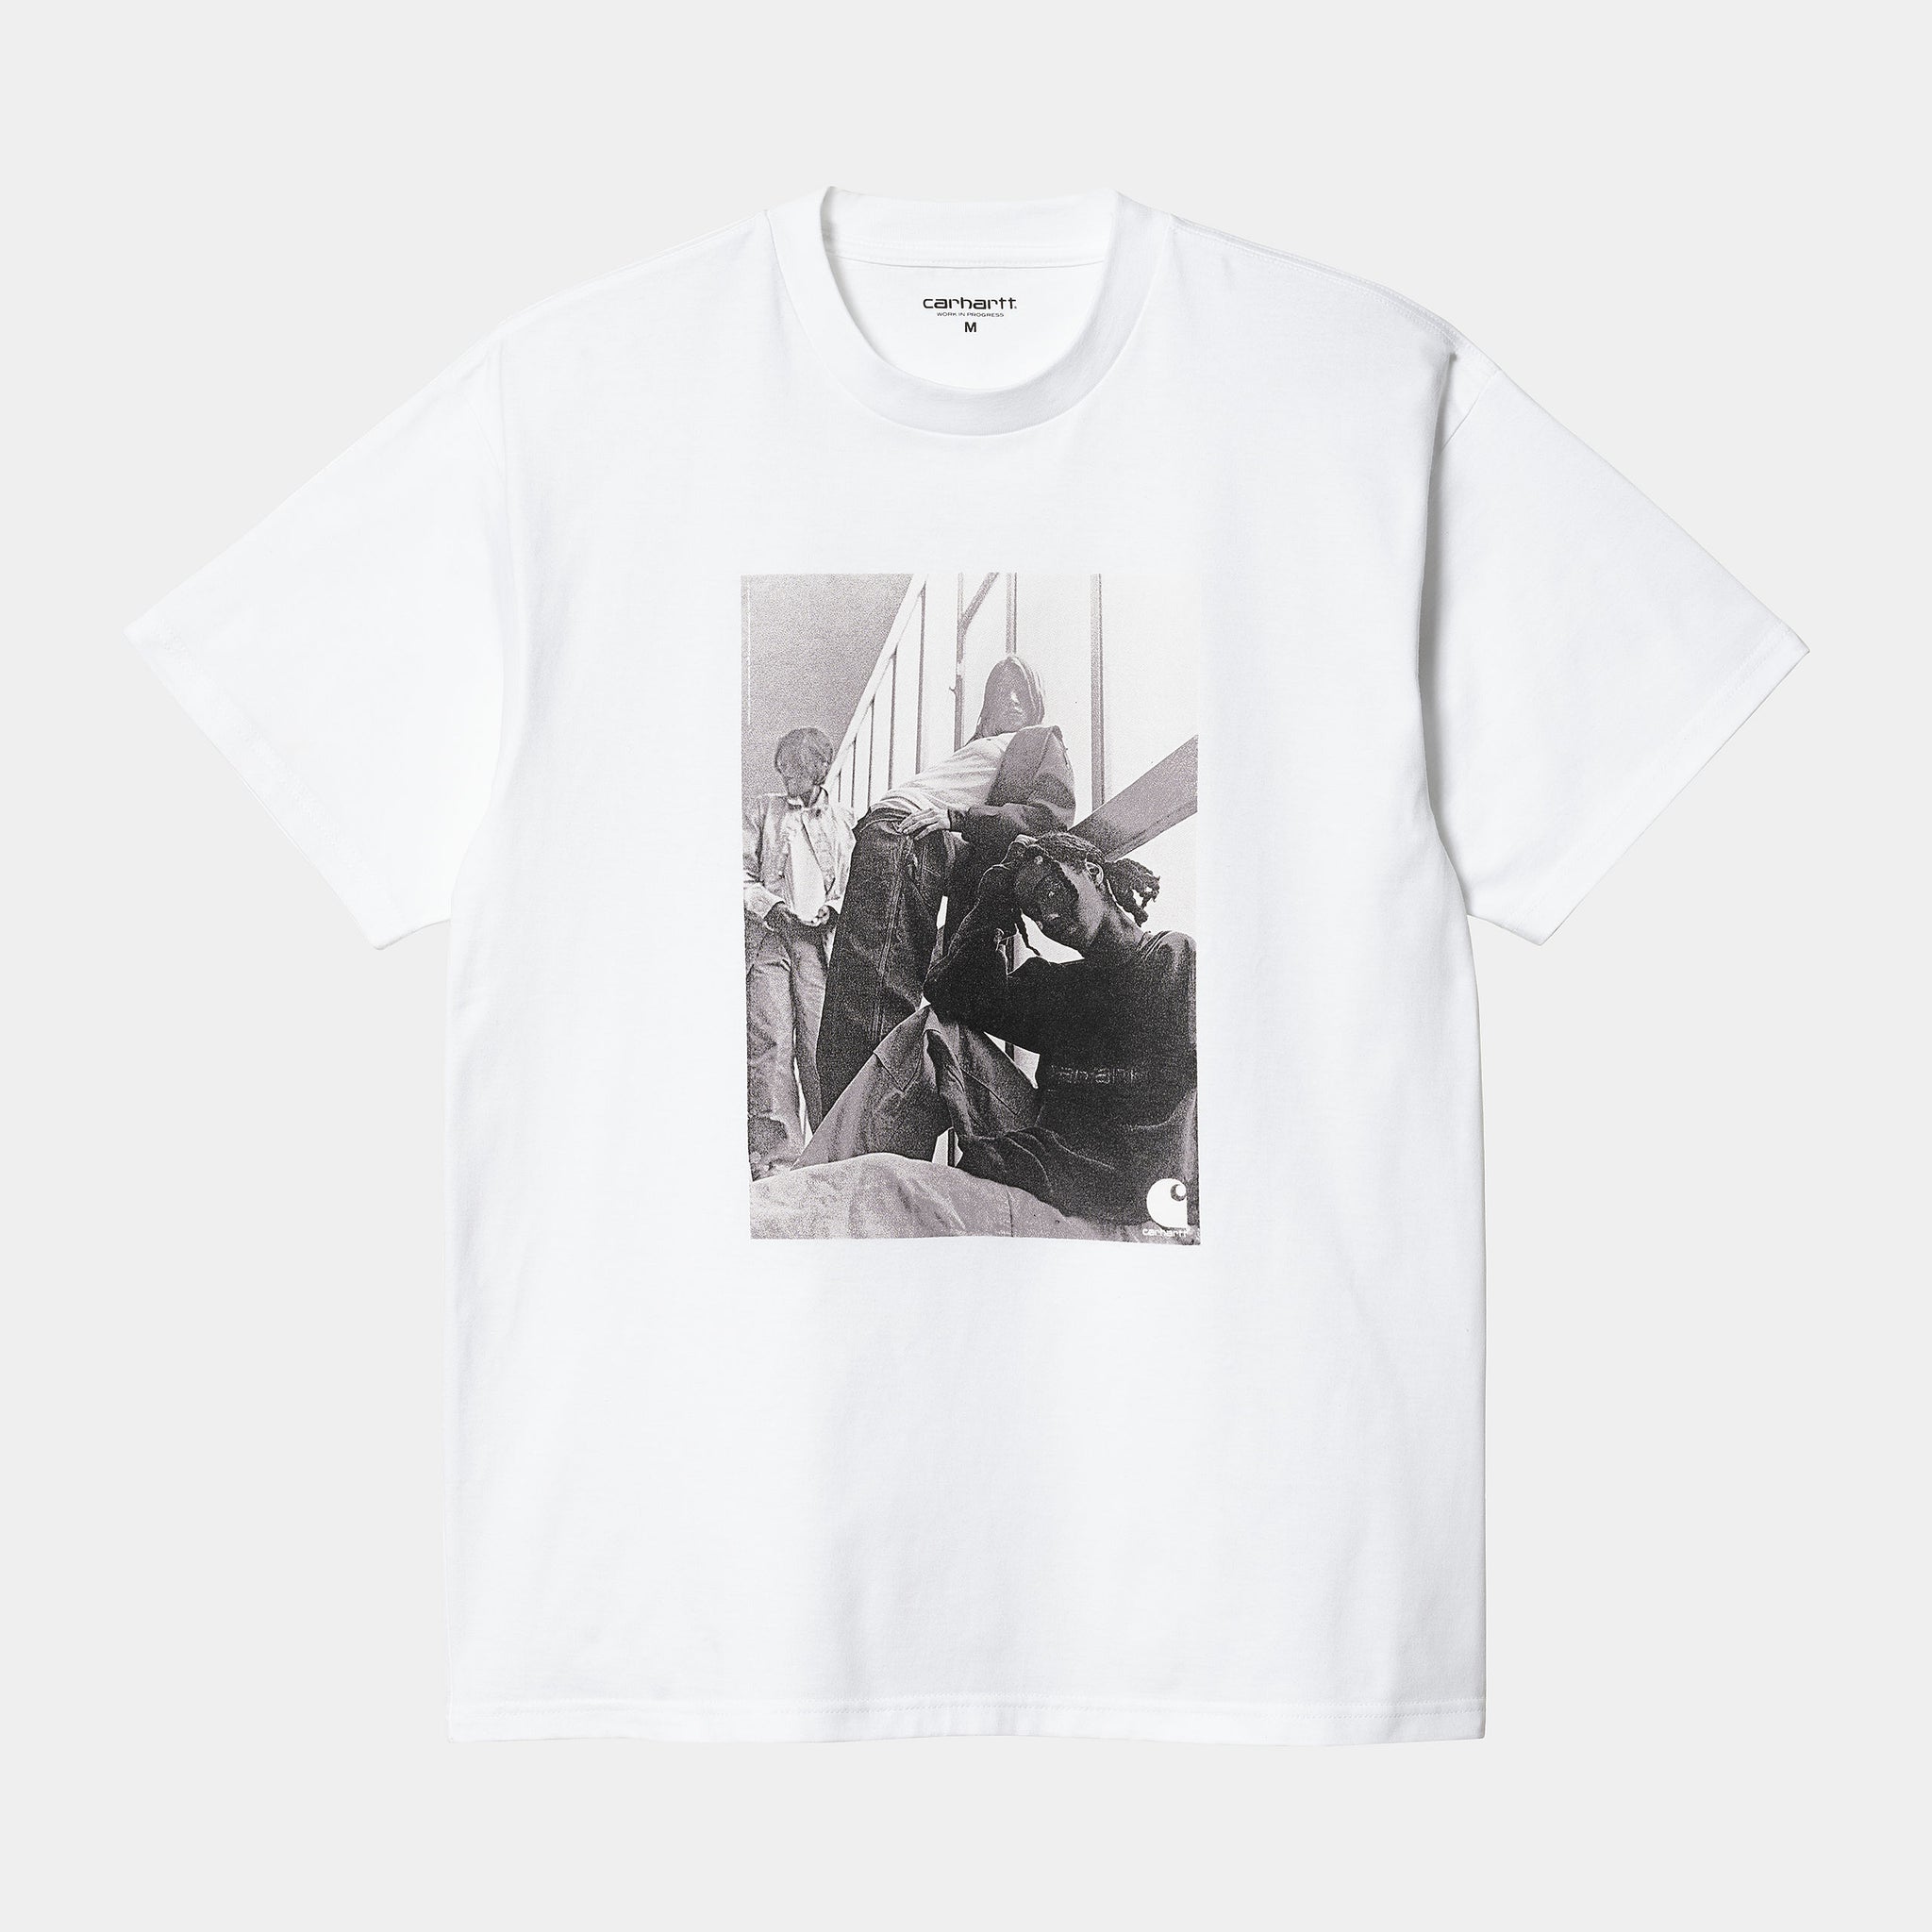 S/S Archive Girls T-Shirt Organic Cotton Single Jersey, 175 g/m² (White)